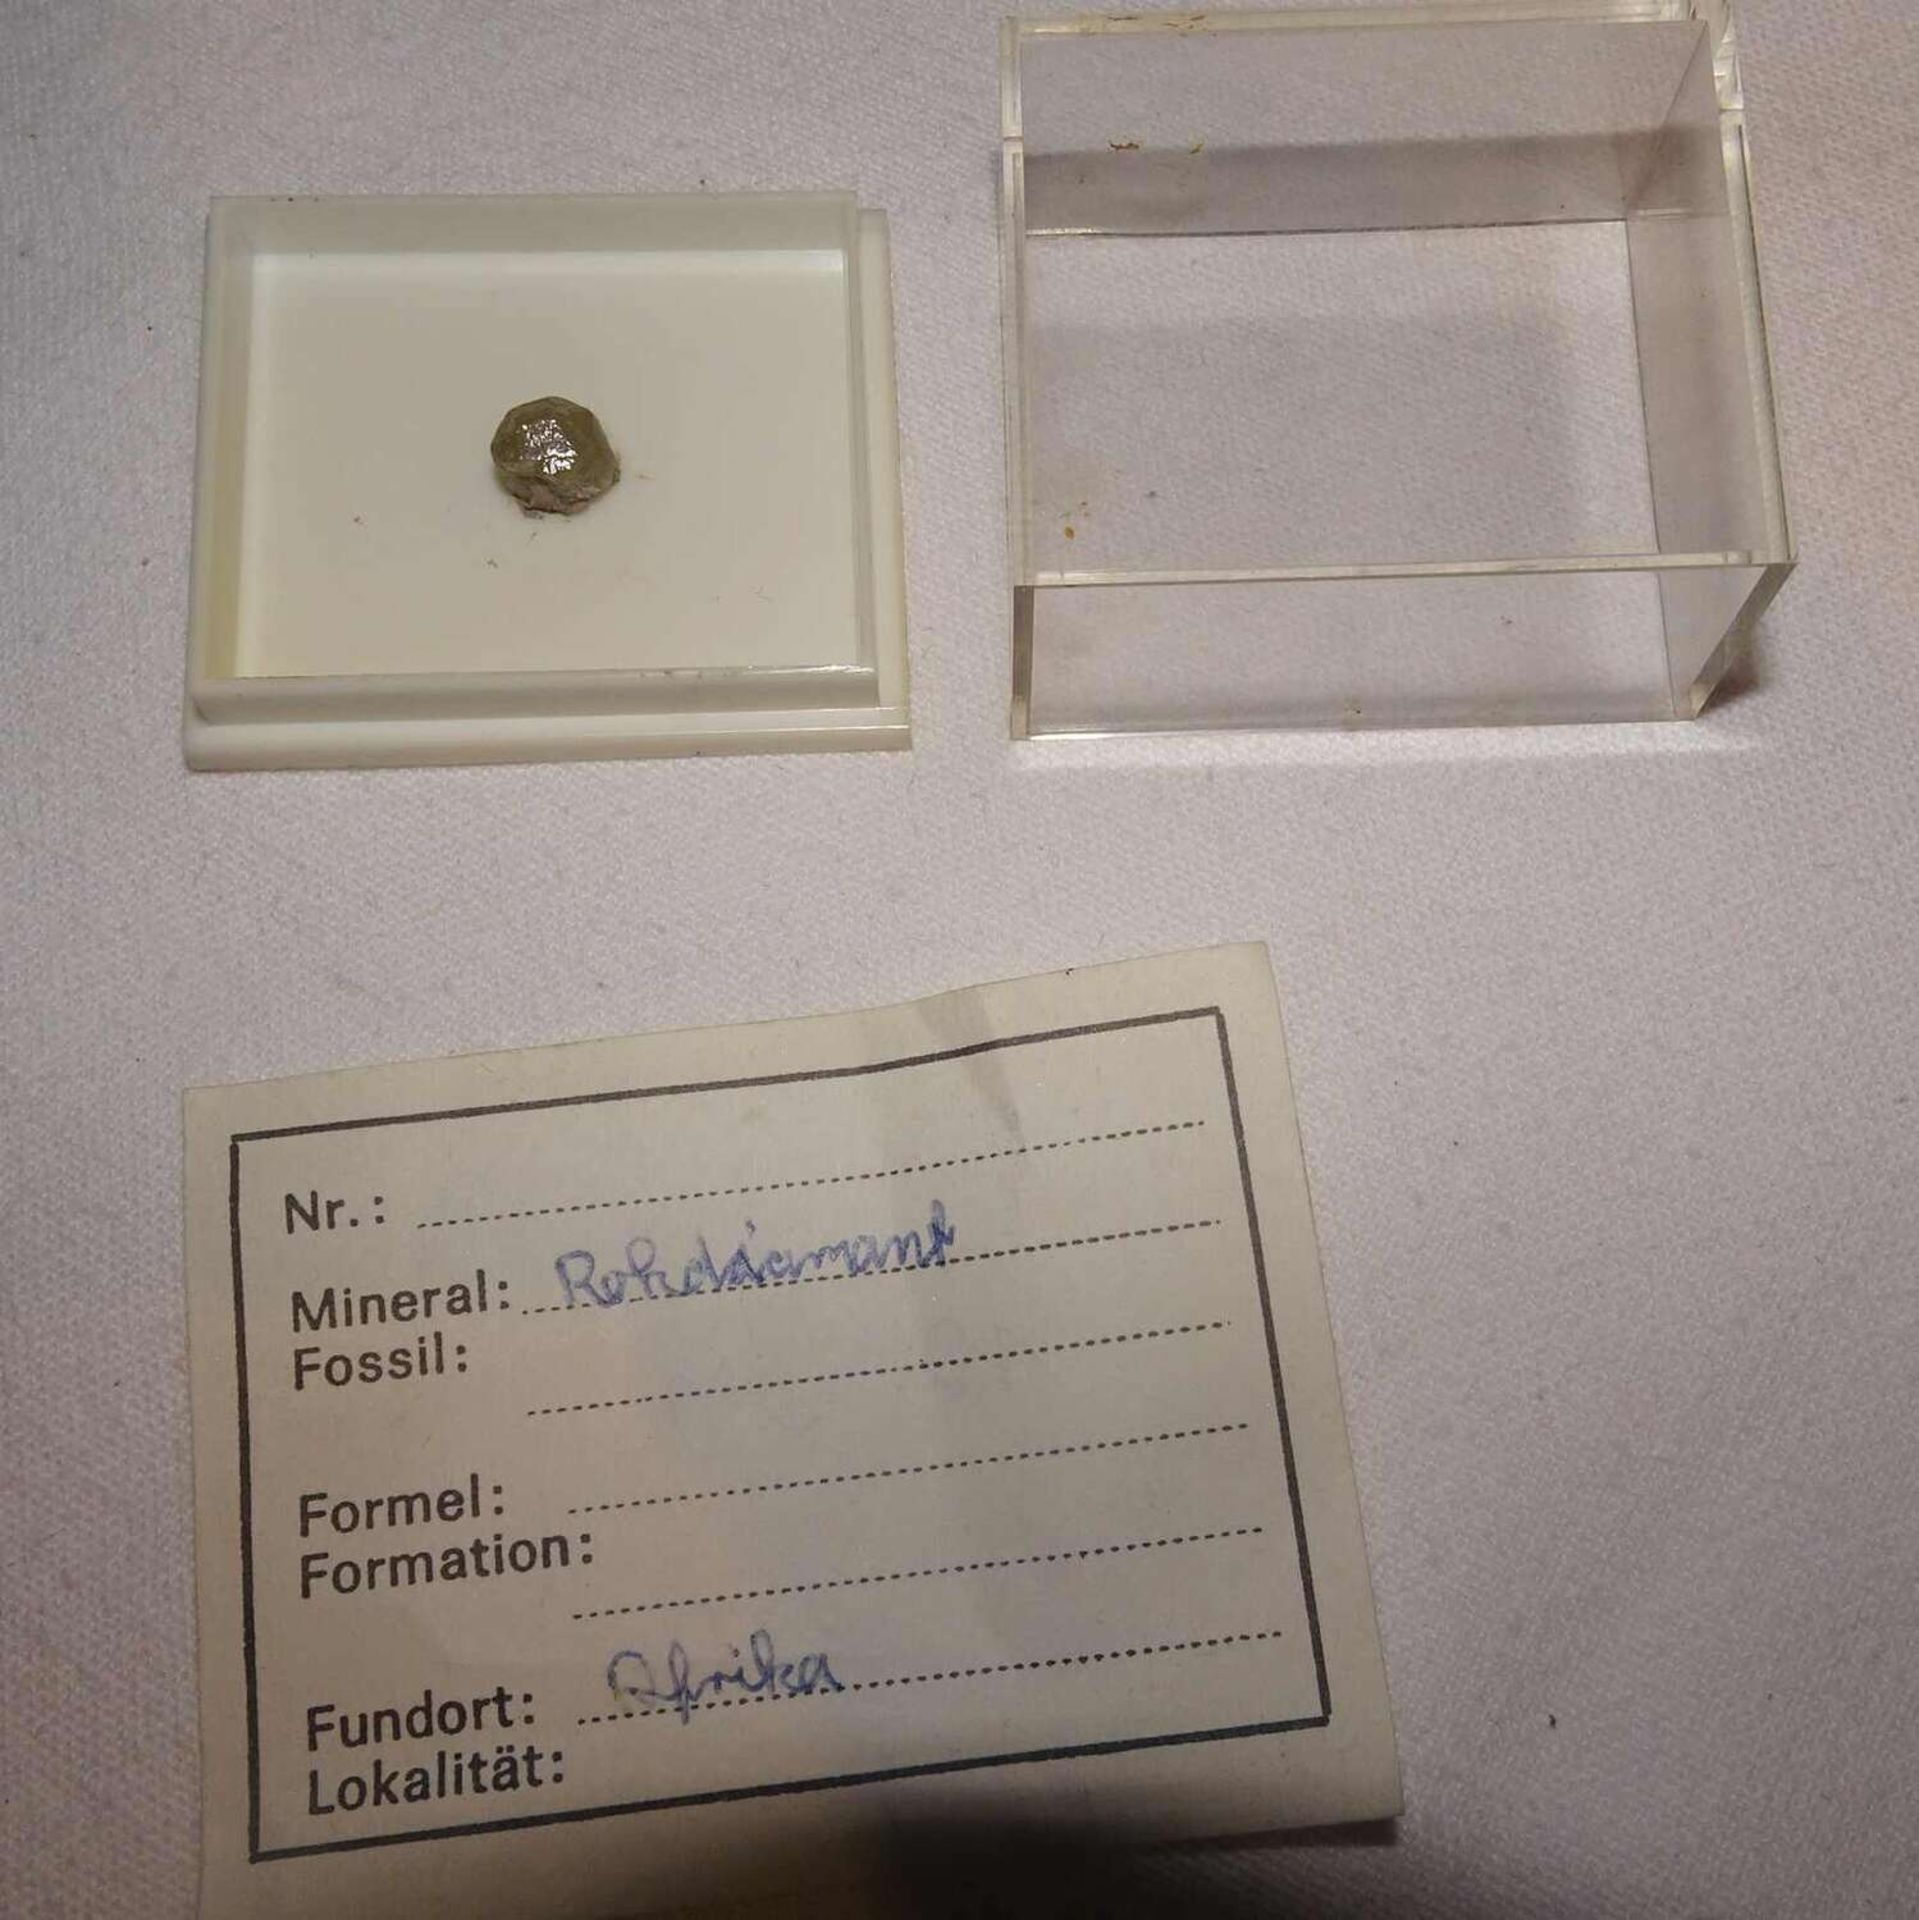 Rohdiamant, Fundort: Afrika Rough diamond, found in: Africa